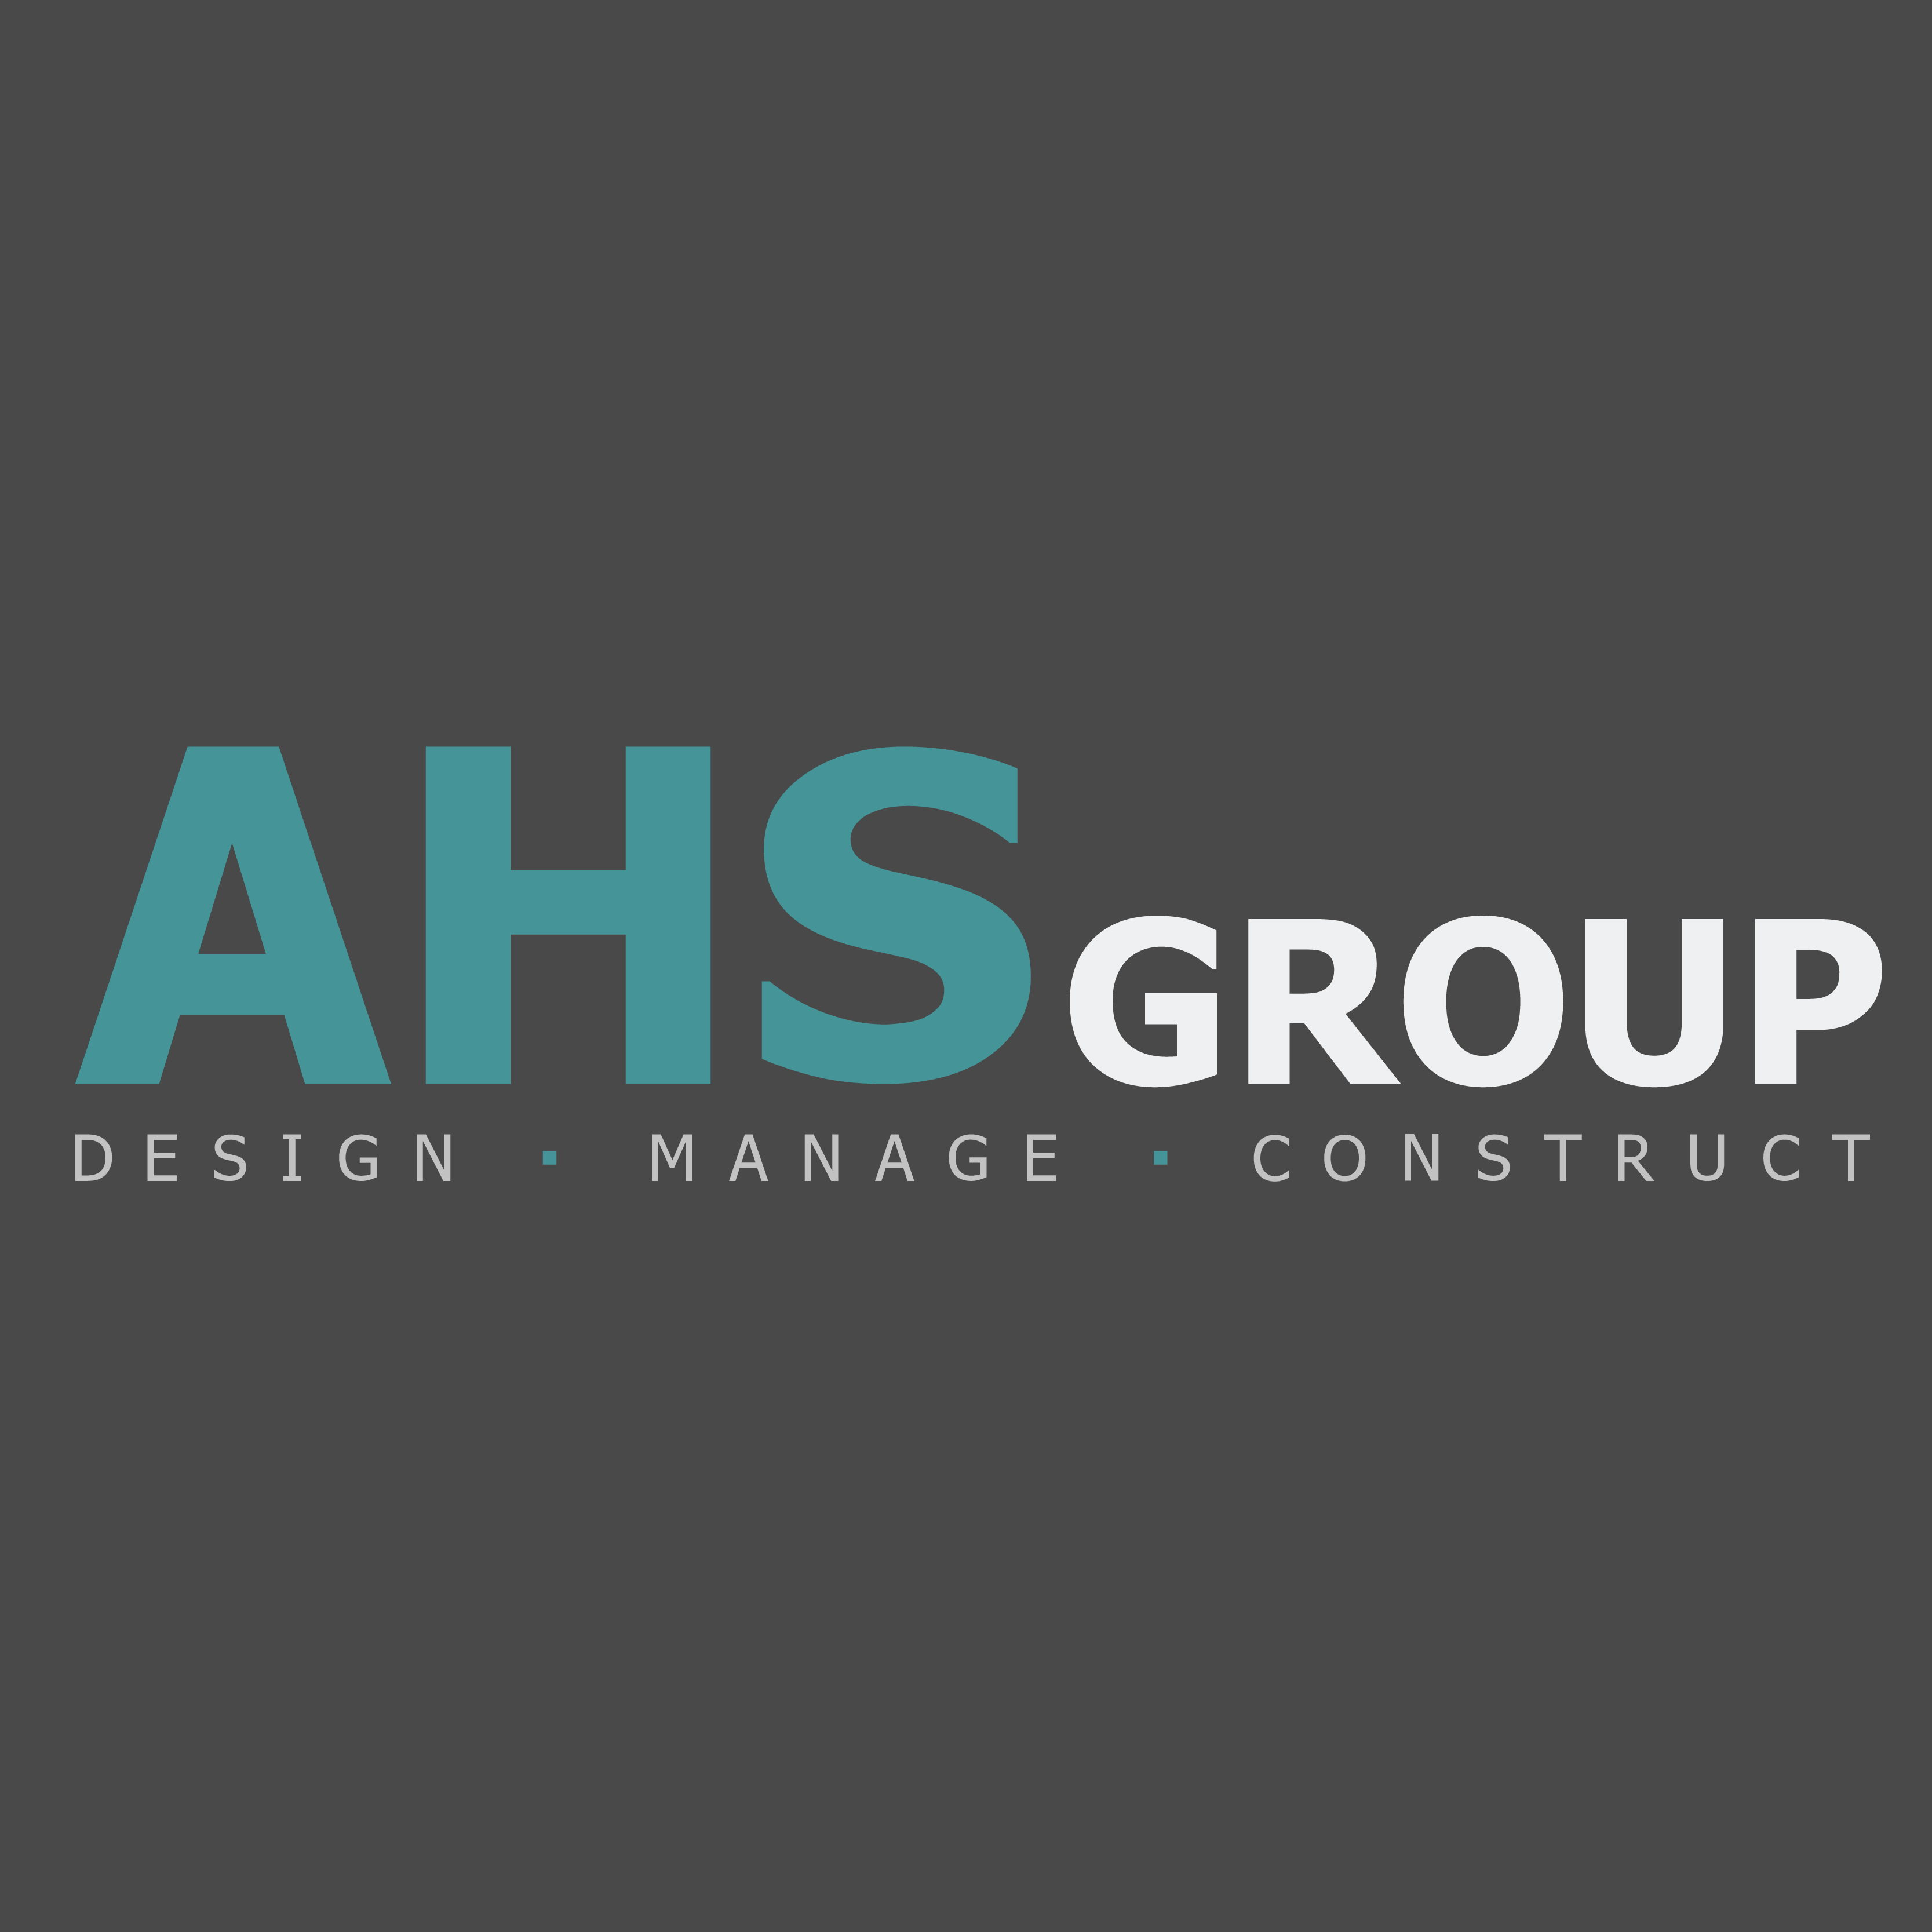 A.H.S Group